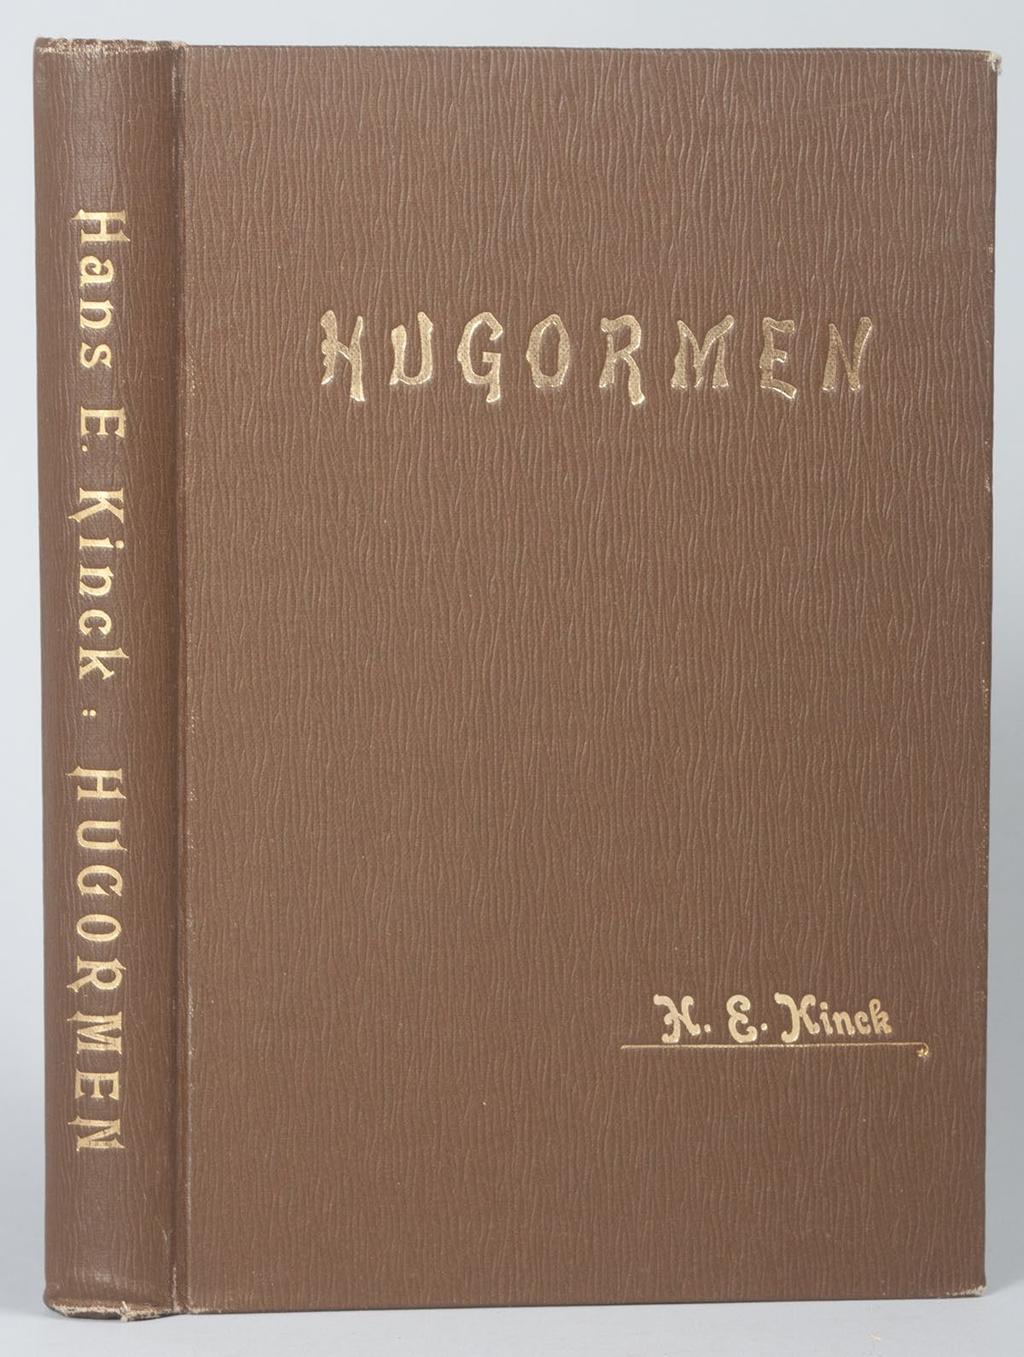 - 11 - HUGORMEN Kristiania. Aschehoug. 1897. 286 sider. Kincks sjette bok. 21. Brunt forlagsbind.